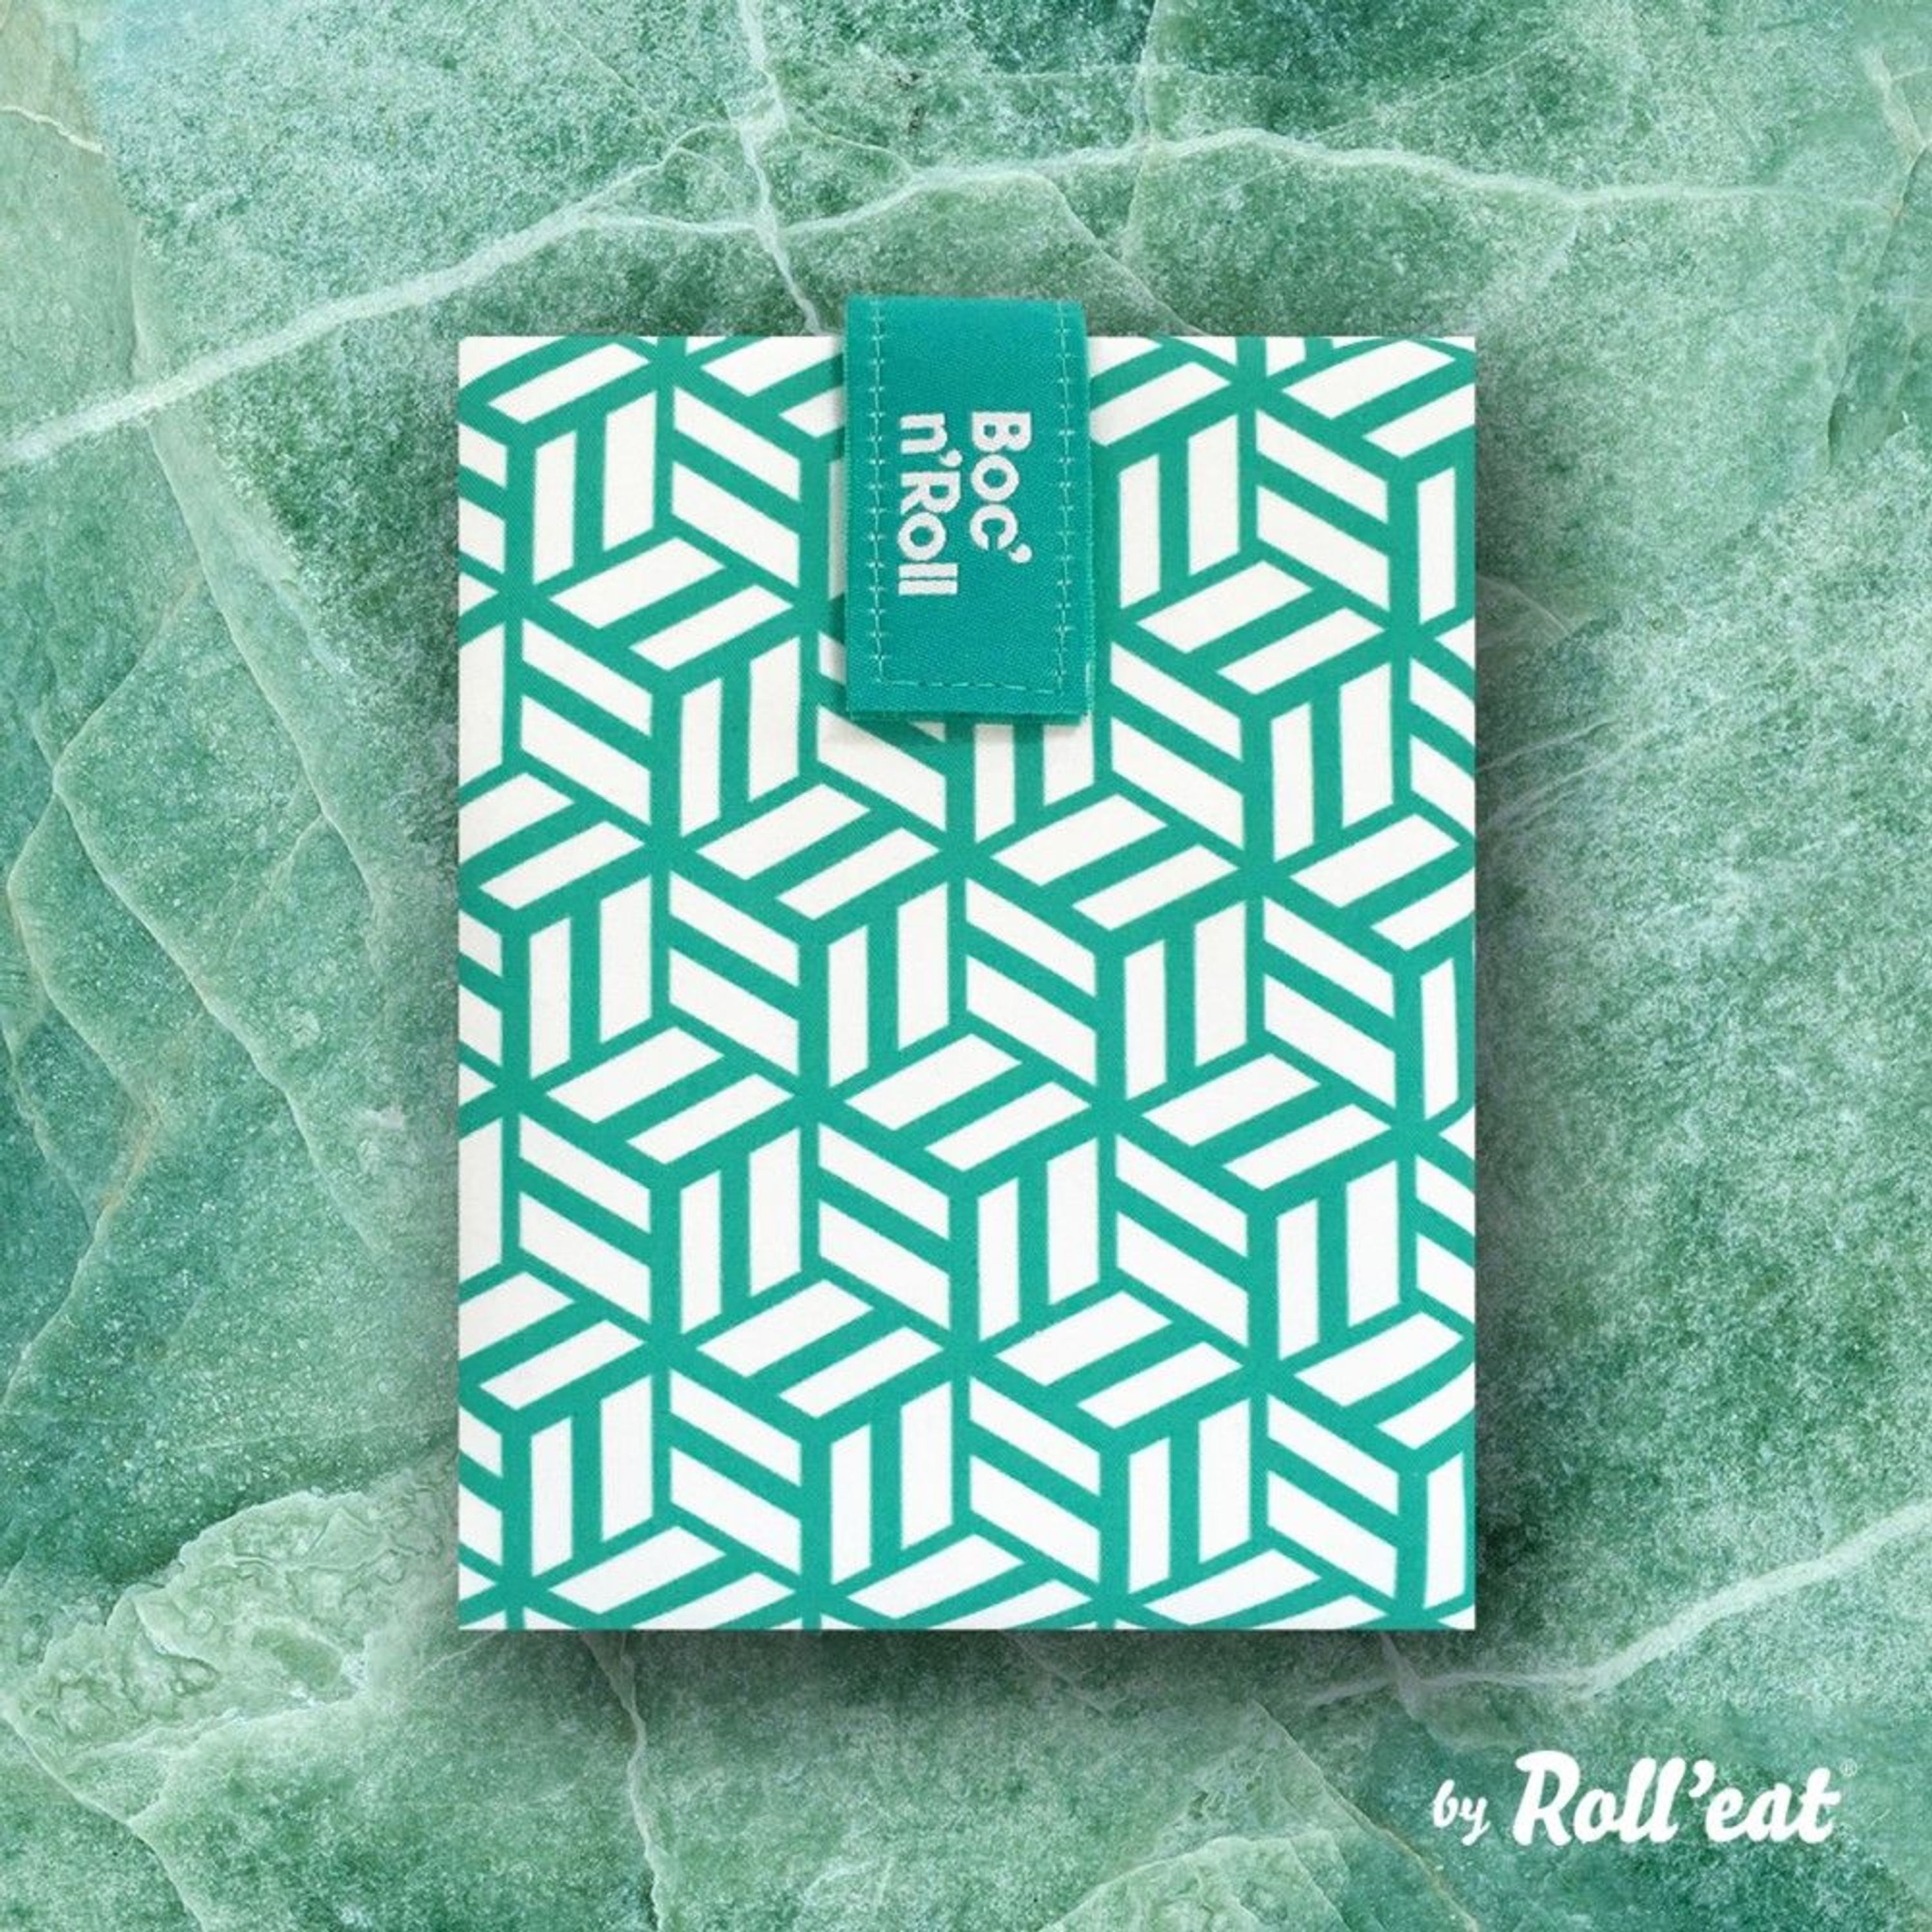  ROLL'EAT ® Boc'n'Roll Tiles, Reusable Sandwich Bag, Sandwich  Container, Eco Friendly Food Bag, Reusable and Washable Sandwich Wrap